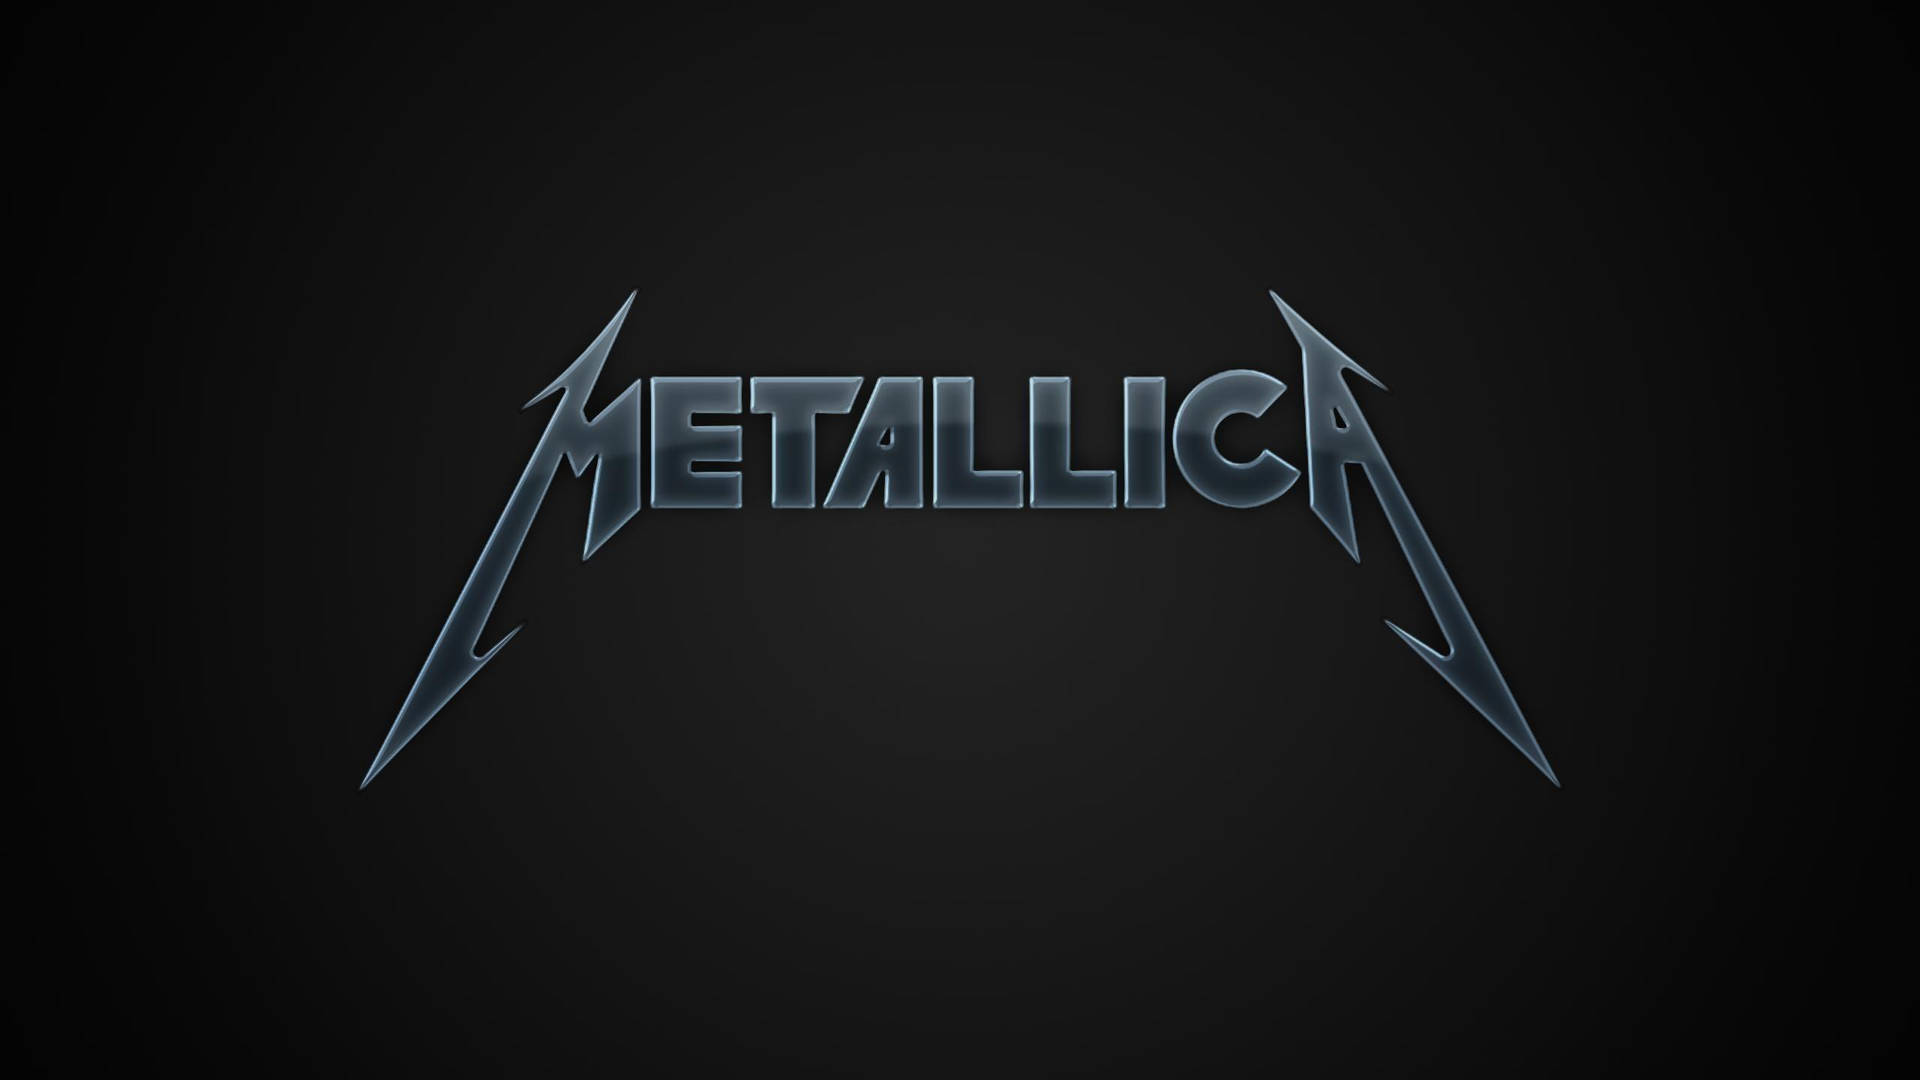 Legendary Heavy Metal Band Metallica Logo from 1983 Wallpaper